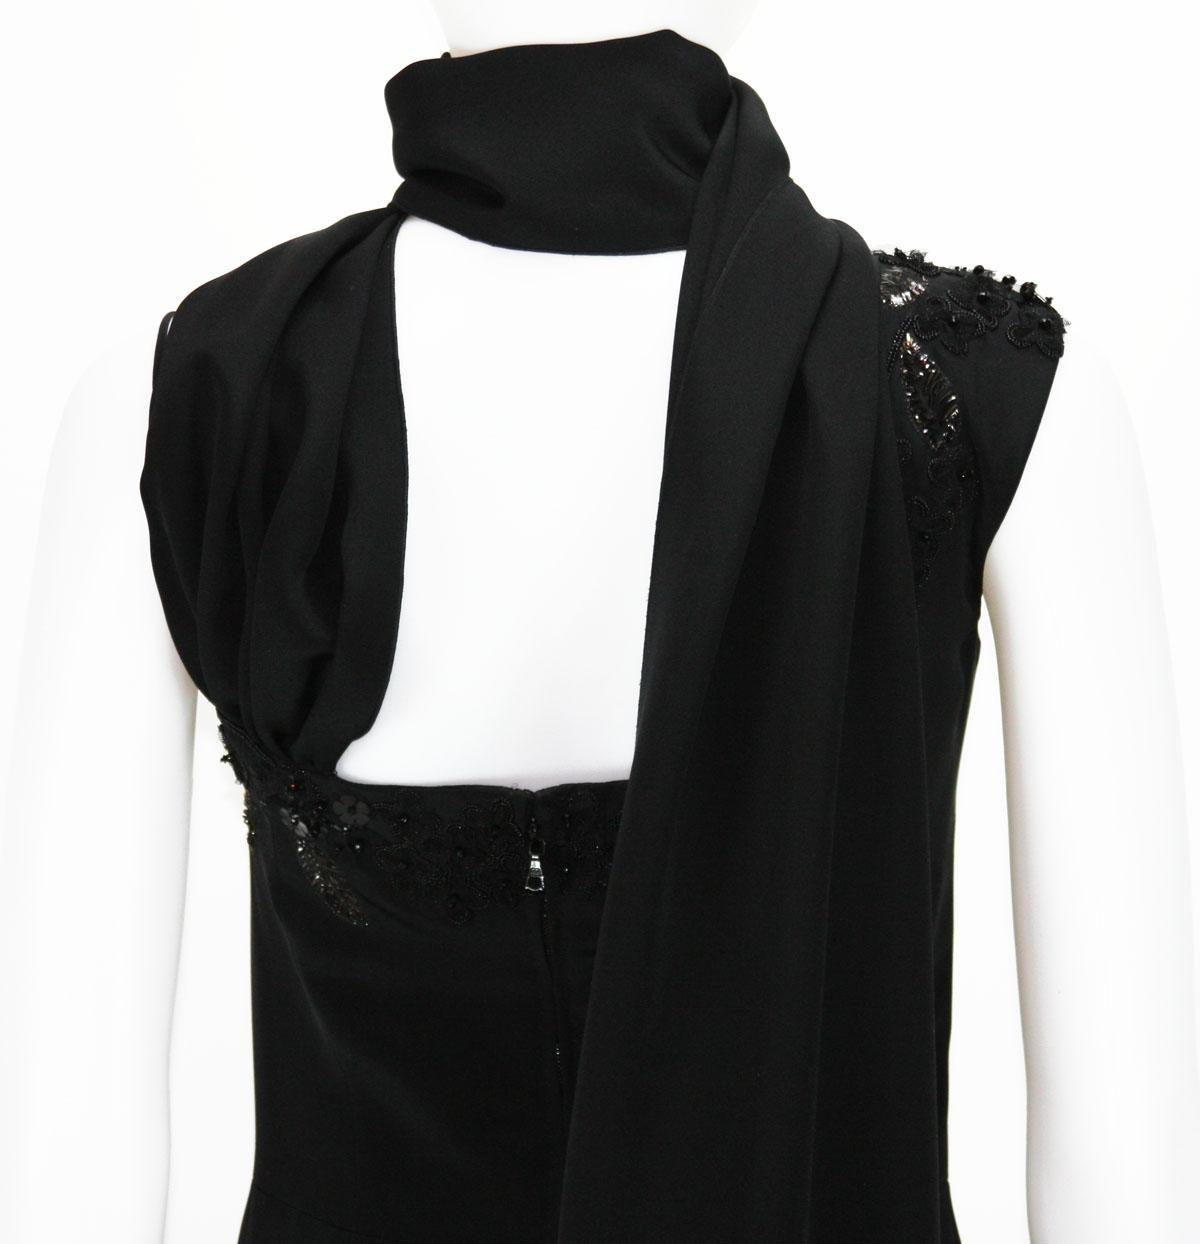 New $7500 L'WREN SCOTT S/S 2010 Represent Her *MADAME DU BARRY* Black Dress Gown 4